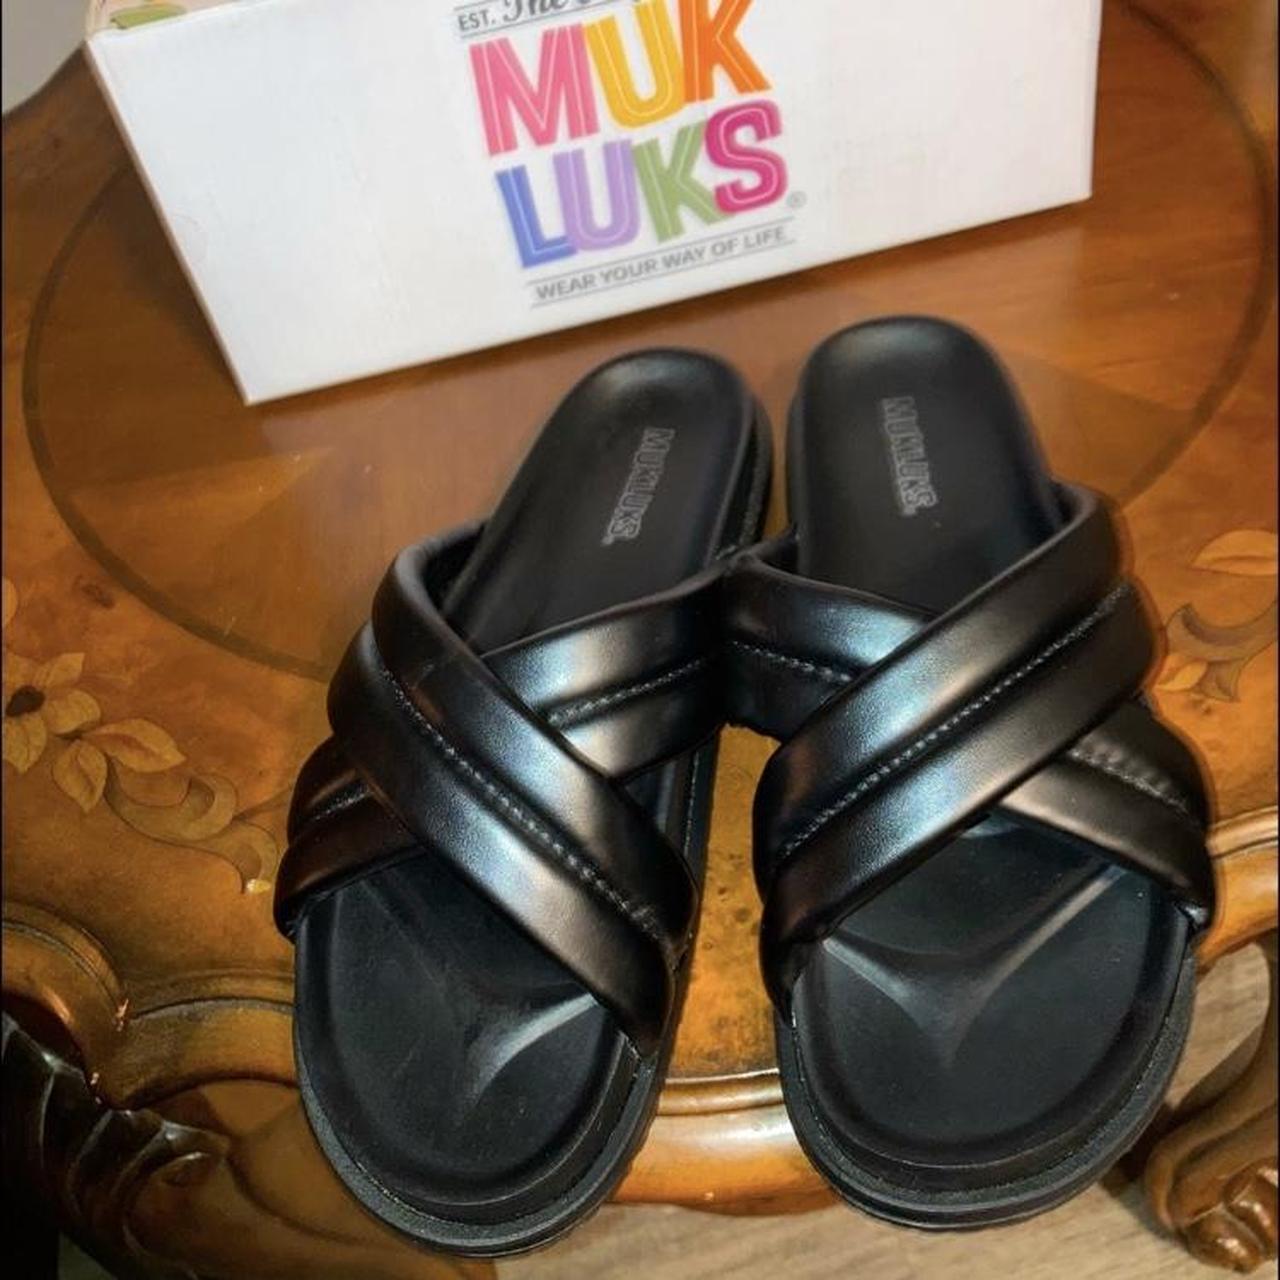 Muk Luks Women's Black Sandals (3)